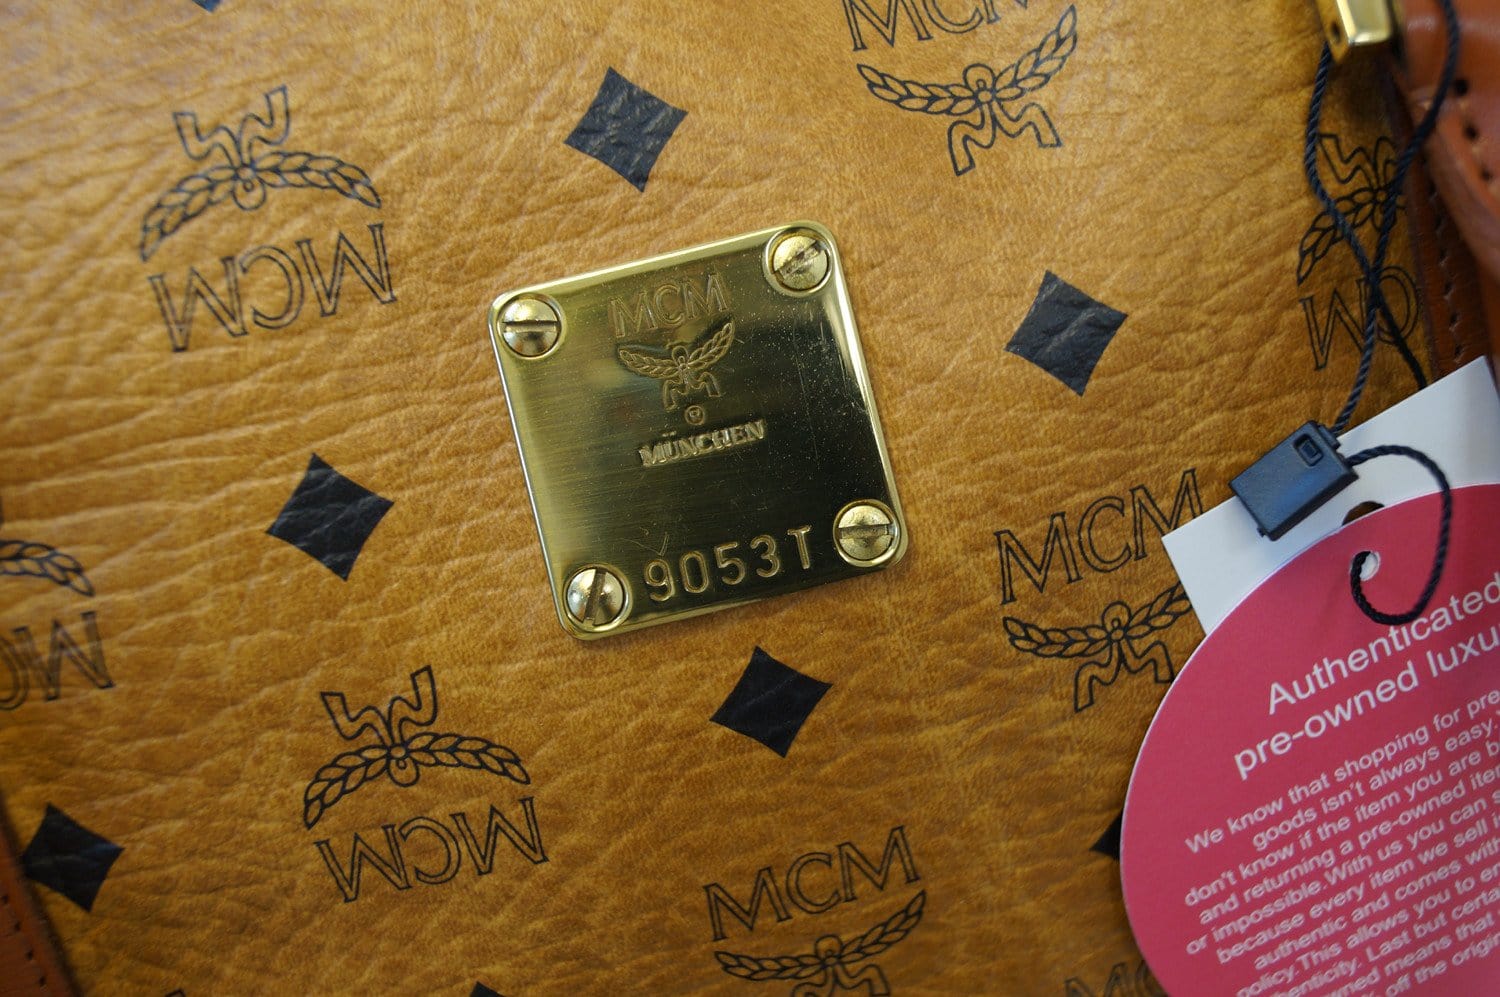 Mcm Authenticated Leather Handbag